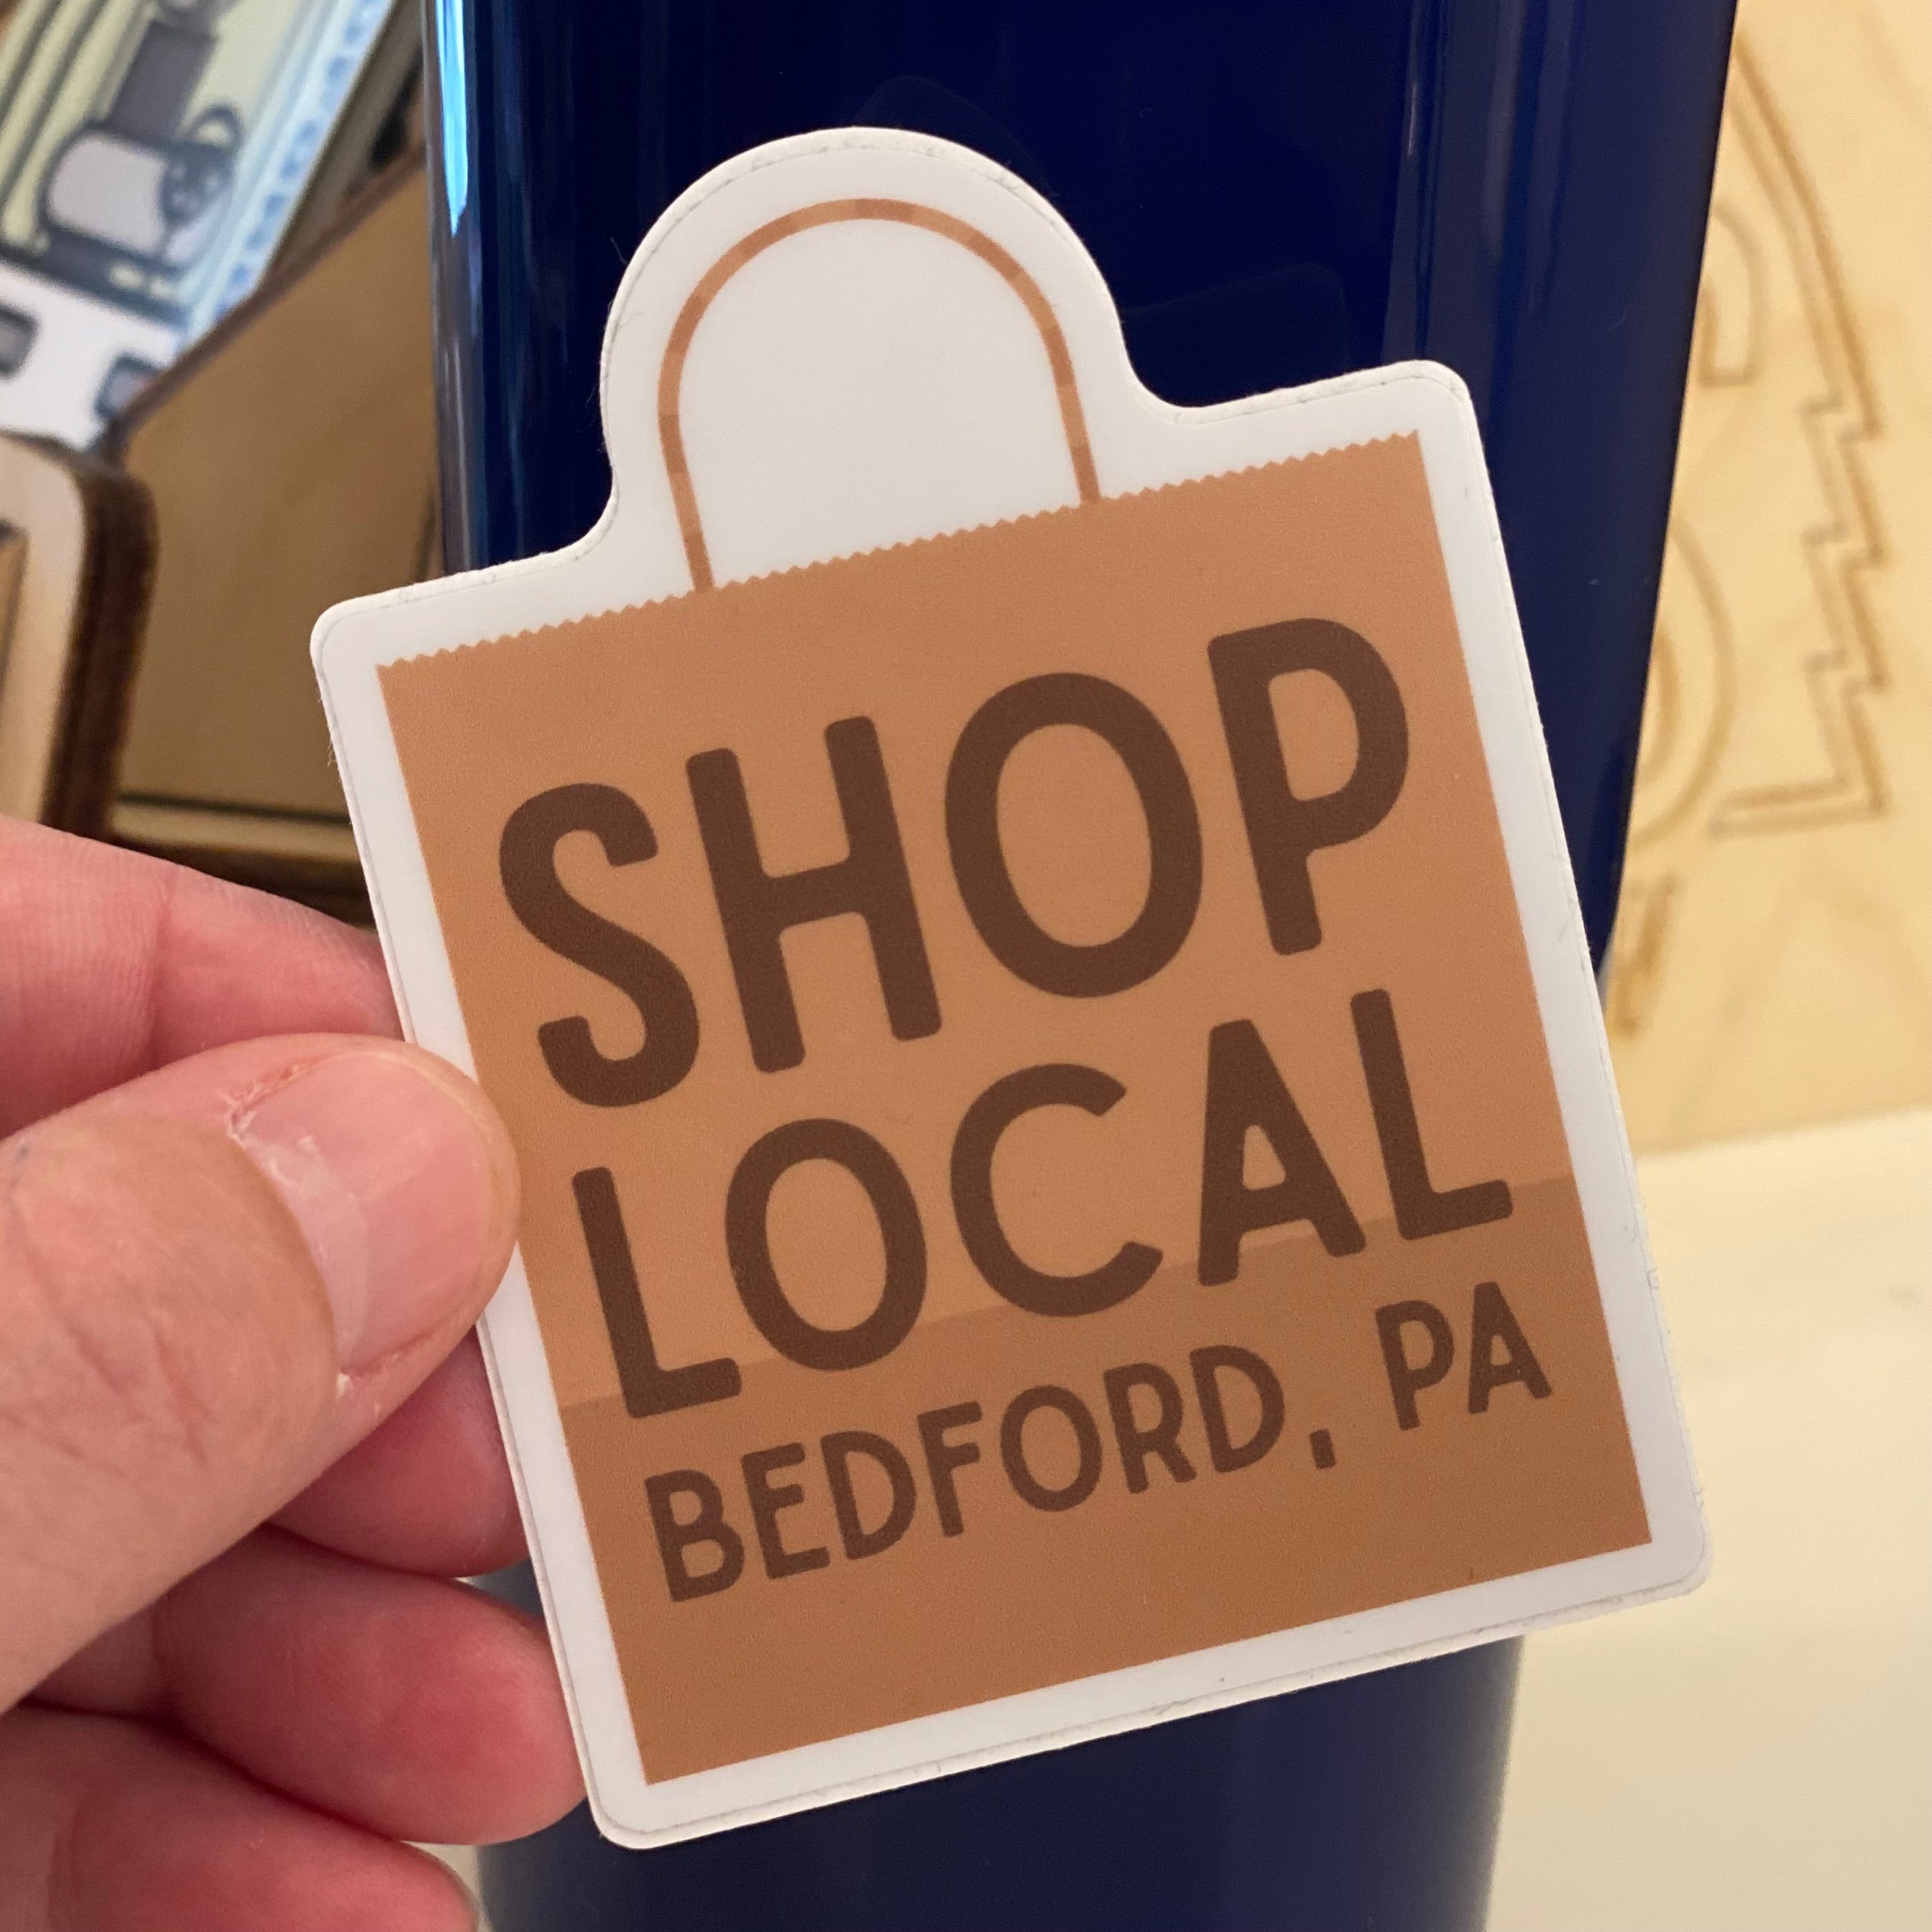 "Shop Local" Bedford, PA Sticker